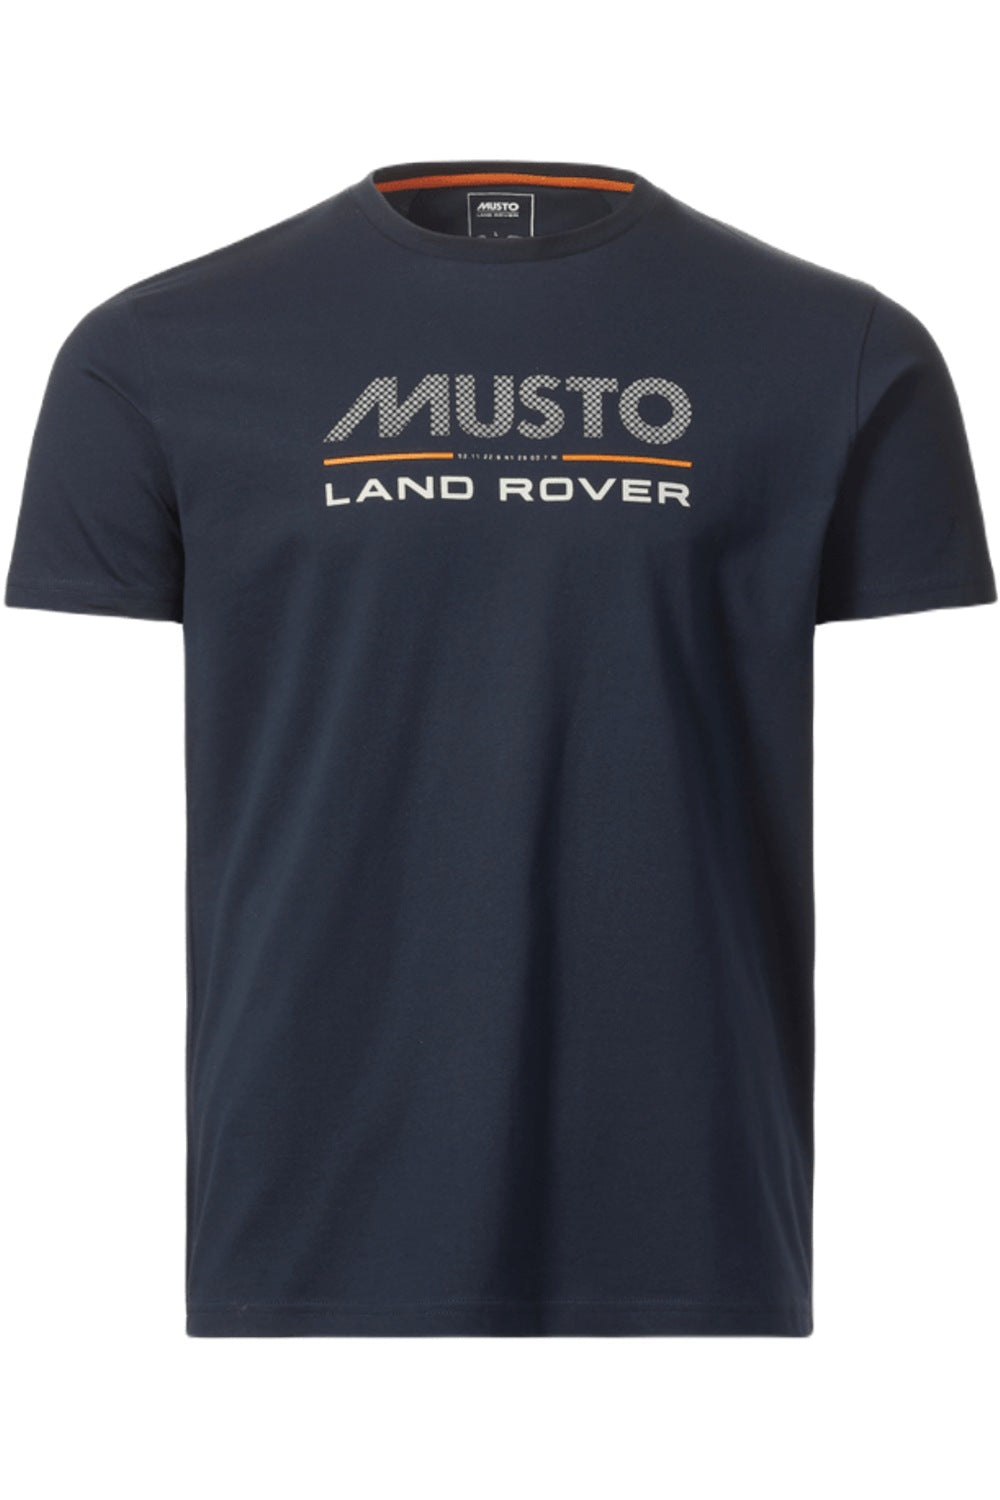 Musto Land Rover Logo Tee | Short Sleeve In Navy  